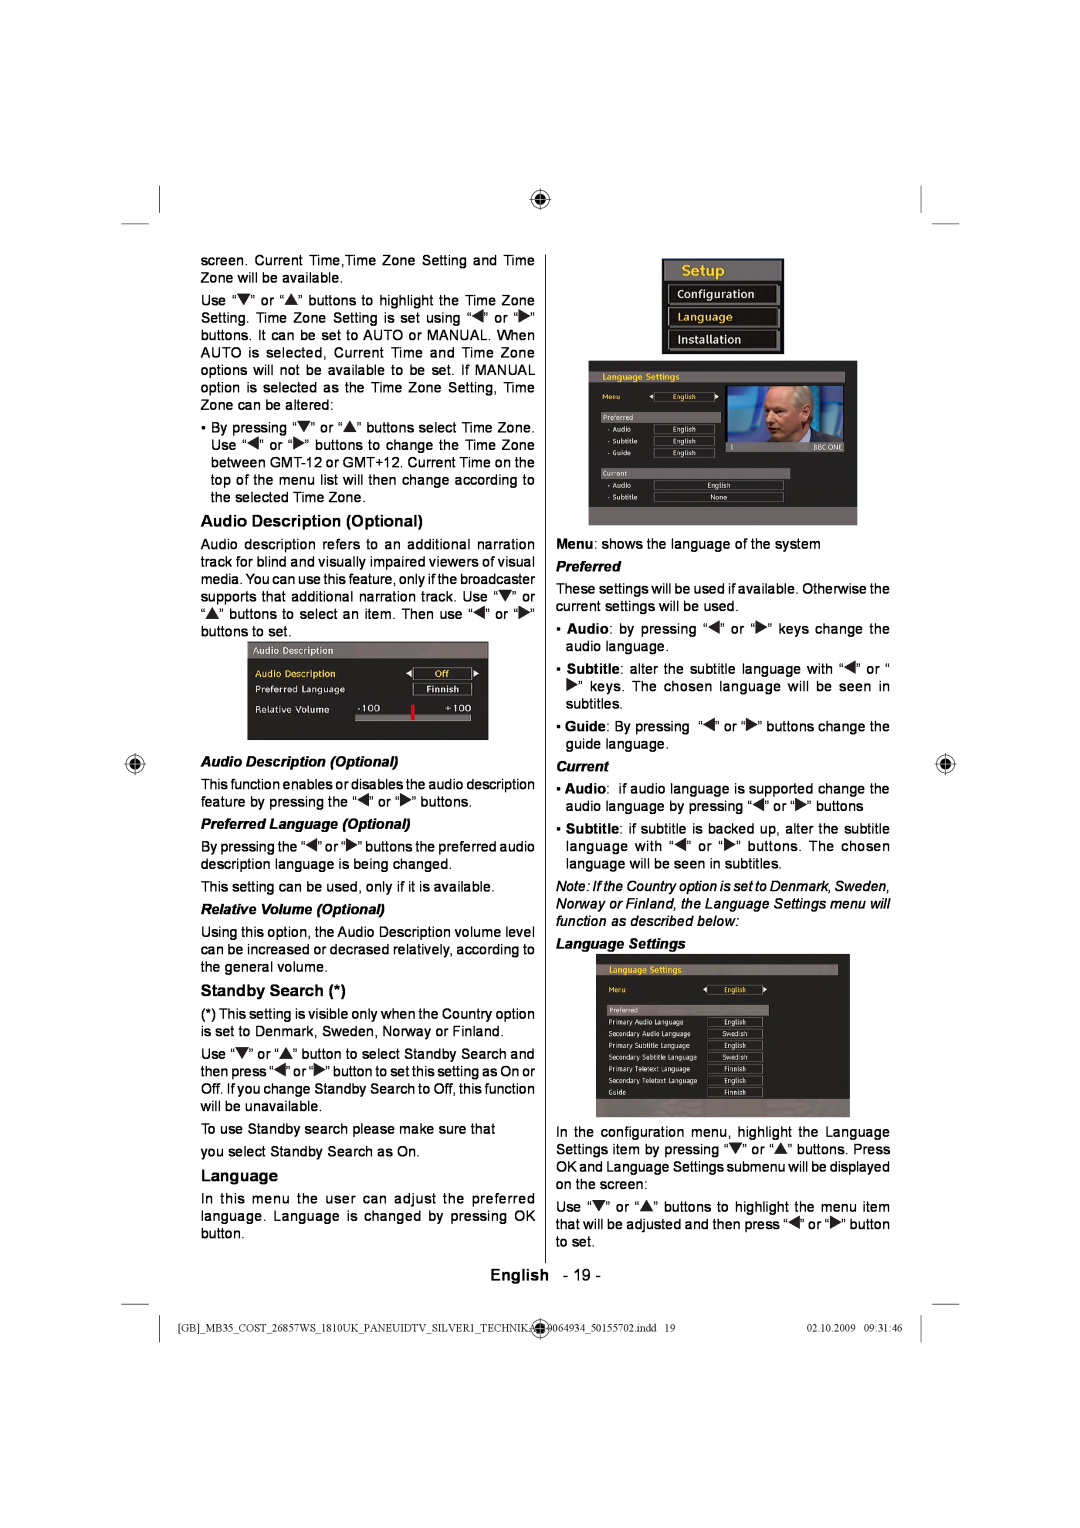 Technika LCD26-920 manual Audio Description Optional, Standby Search, English, Preferred Language Optional, Current 